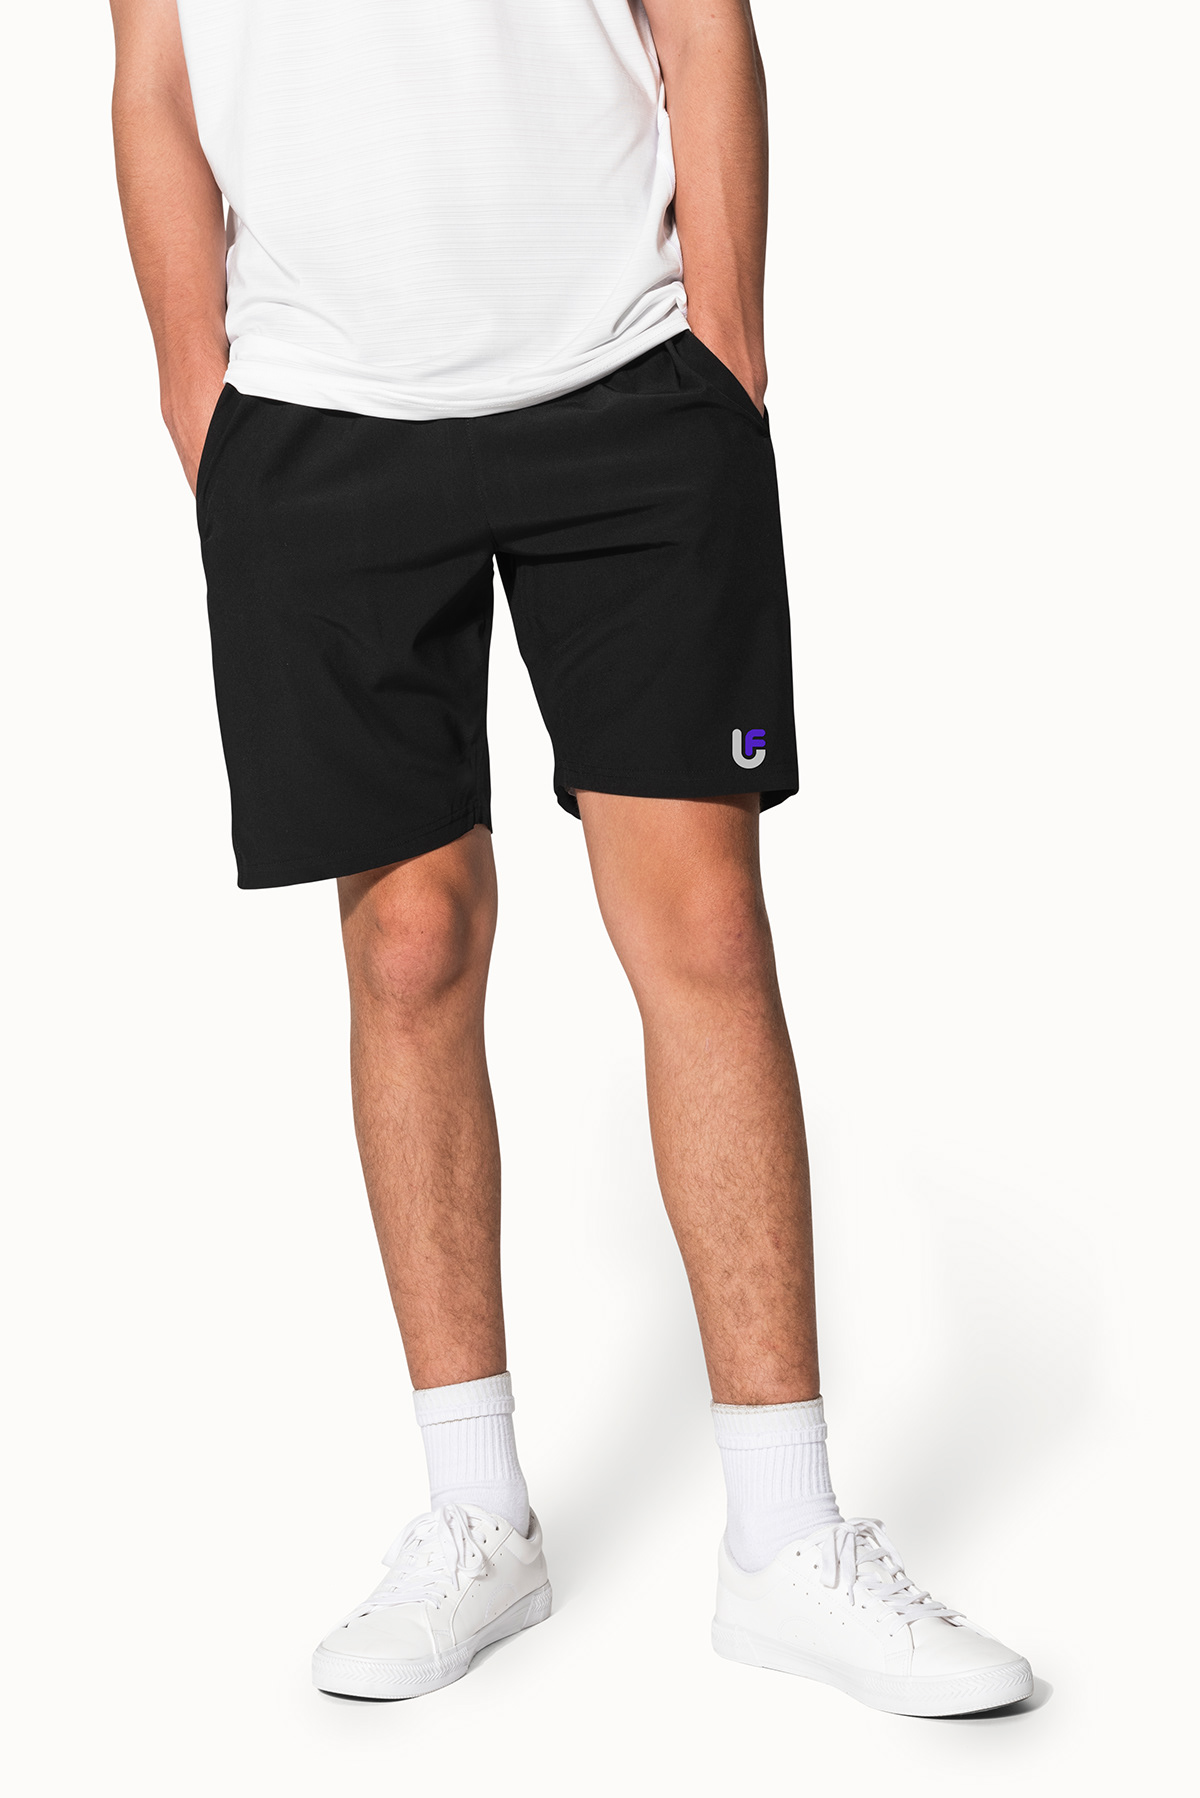 t-shirt Clothing uniform sports Sweatshirt apparel